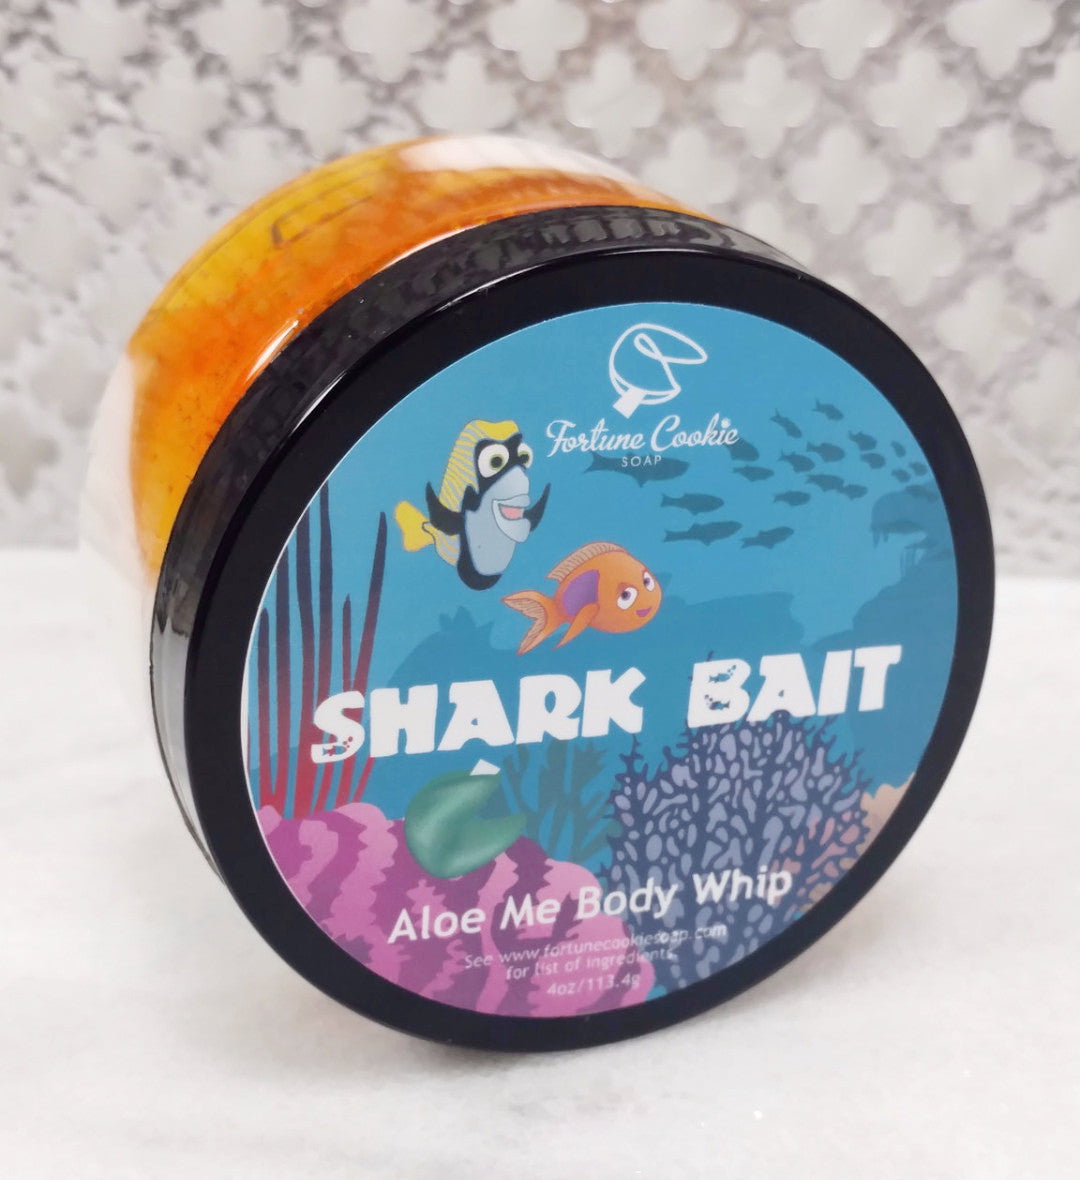 SHARK BAIT Aloe Me Body Whip - Fortune Cookie Soap - 1